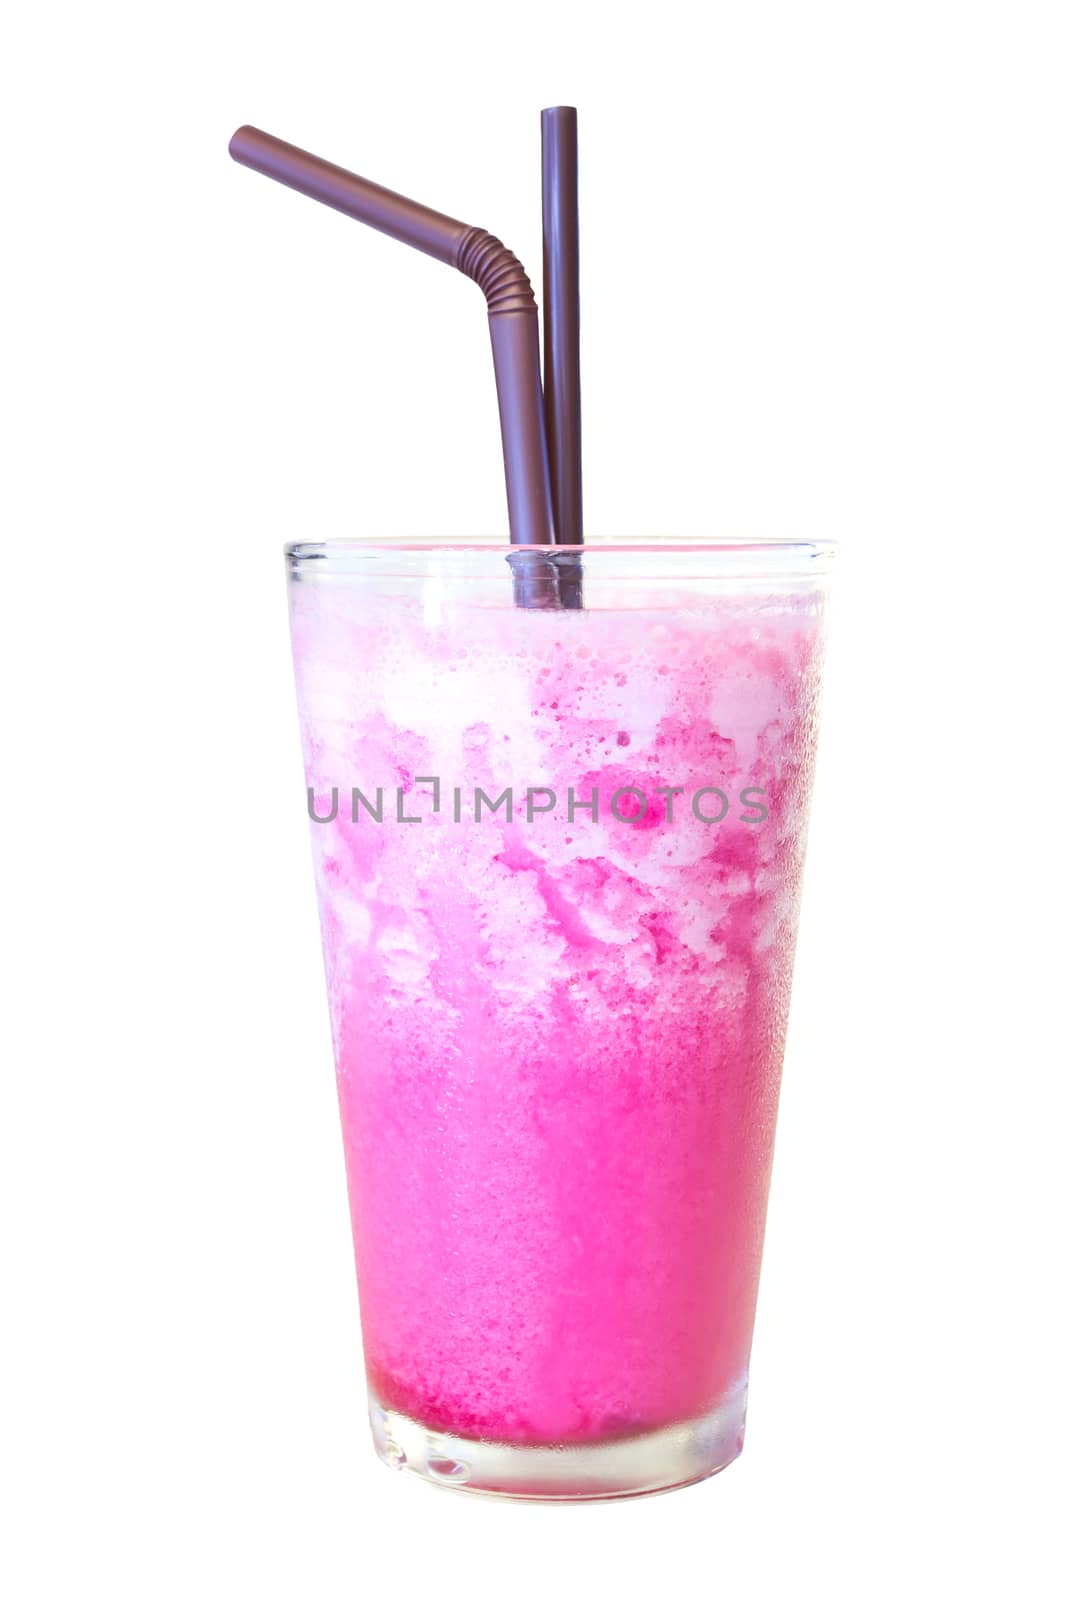 Healthy juice made of freshly juiced fruits and vegetables by wyoosumran